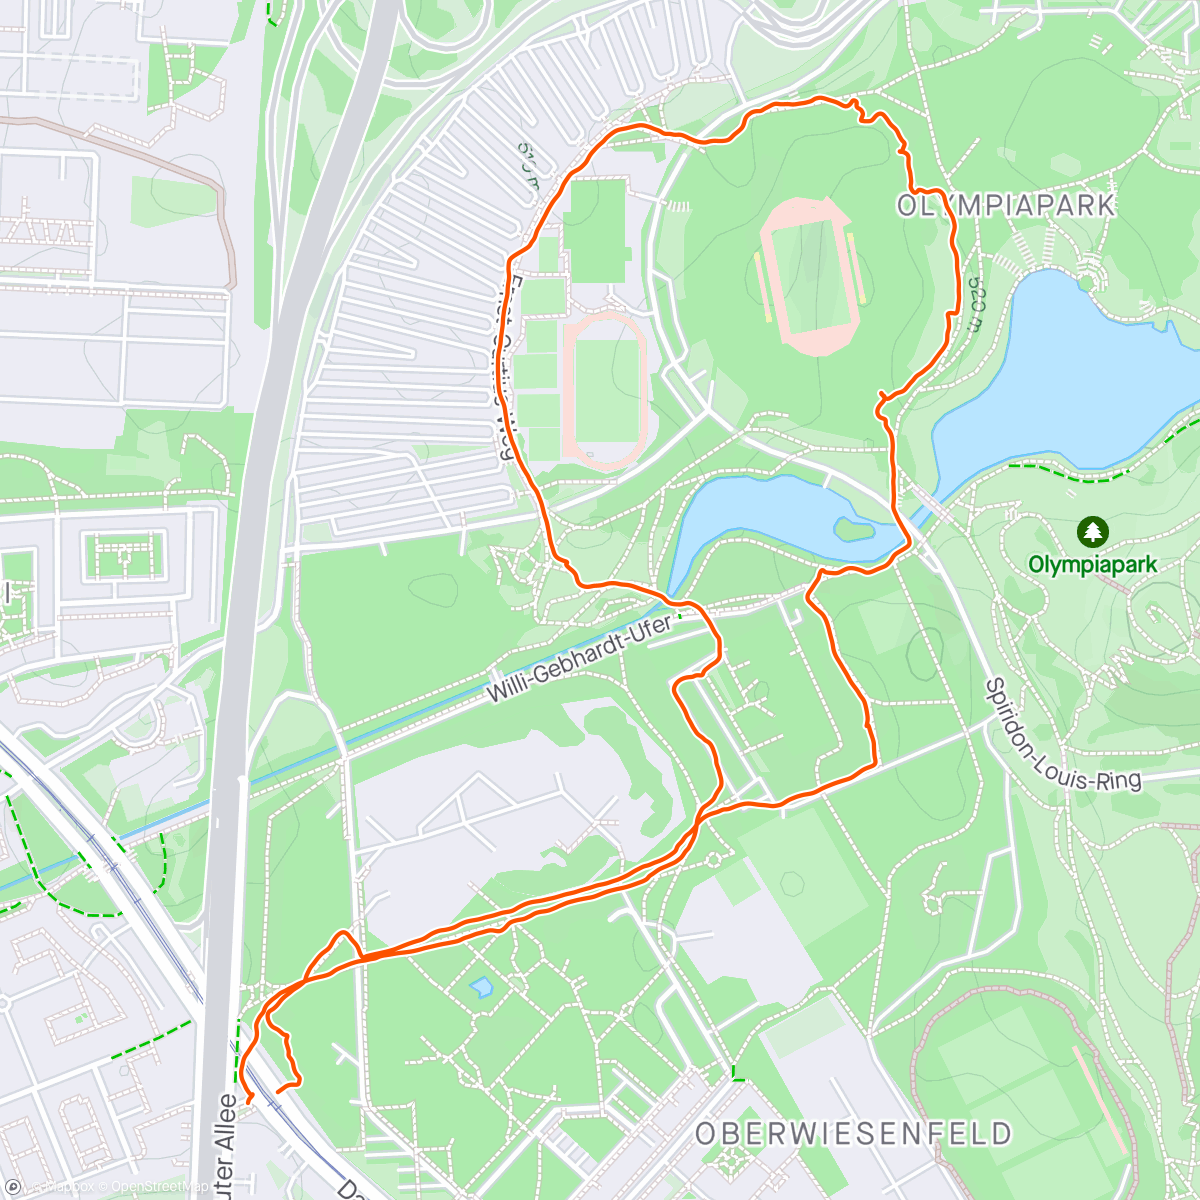 「Rondje Olympiapark München」活動的地圖